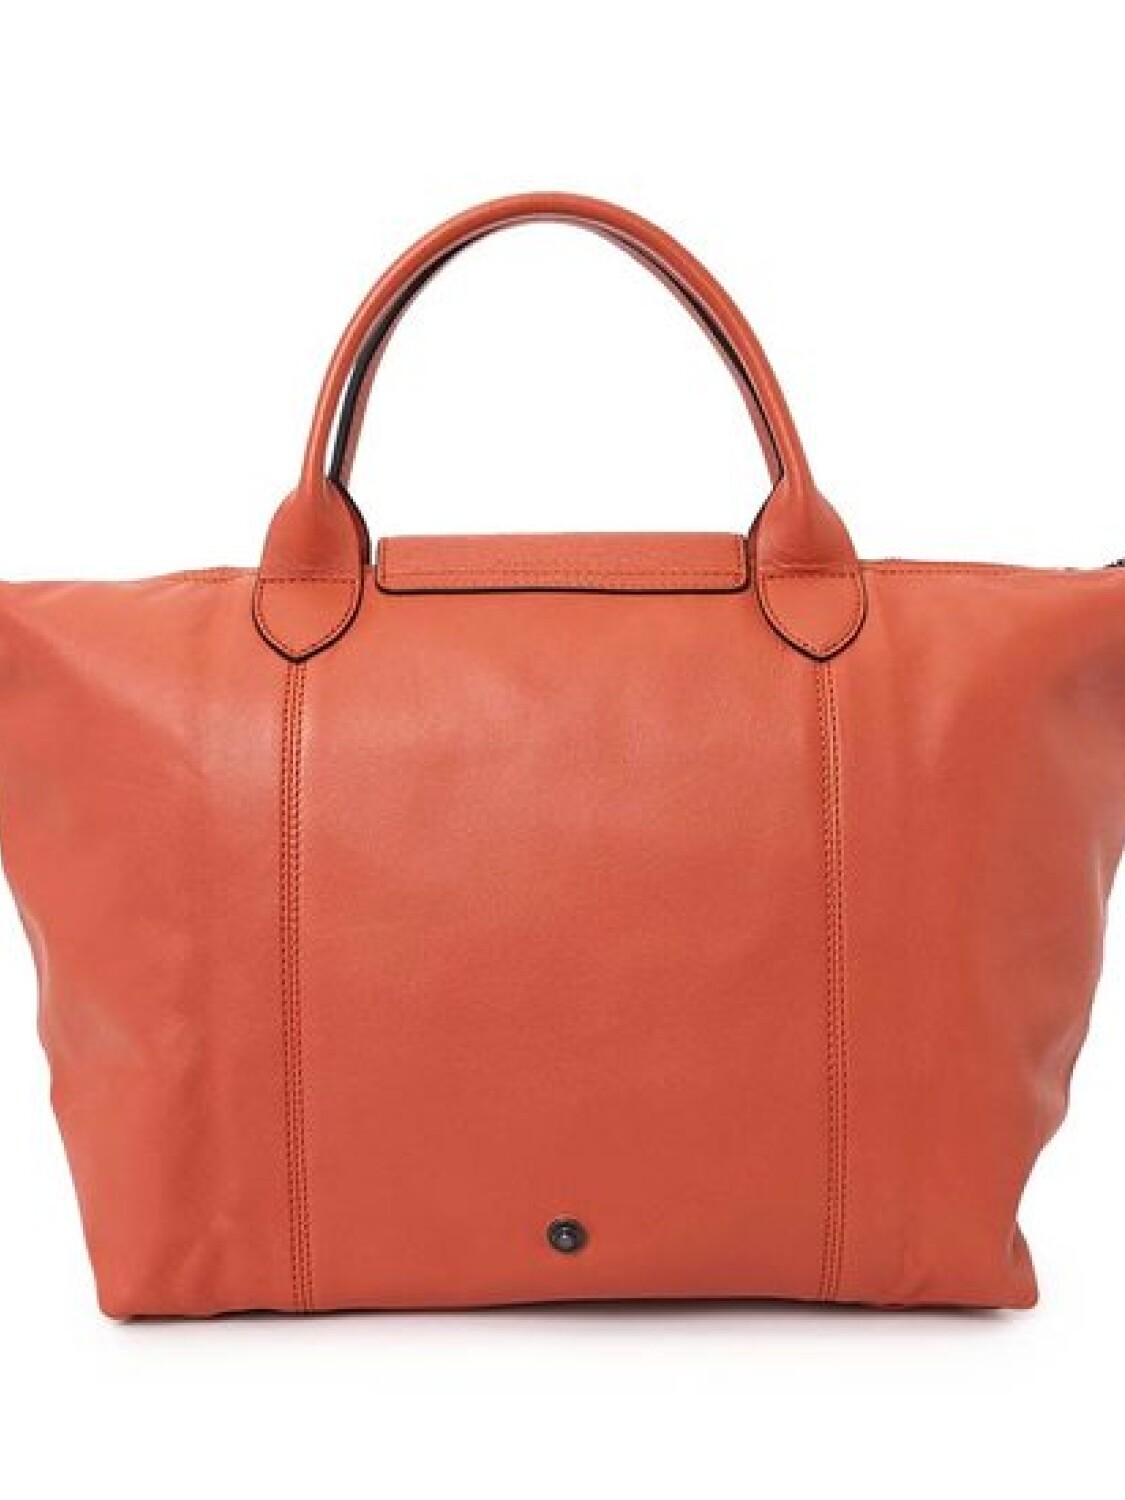 Longchamp -Cartera de cuero plegable, Le pliage cuir Naranja